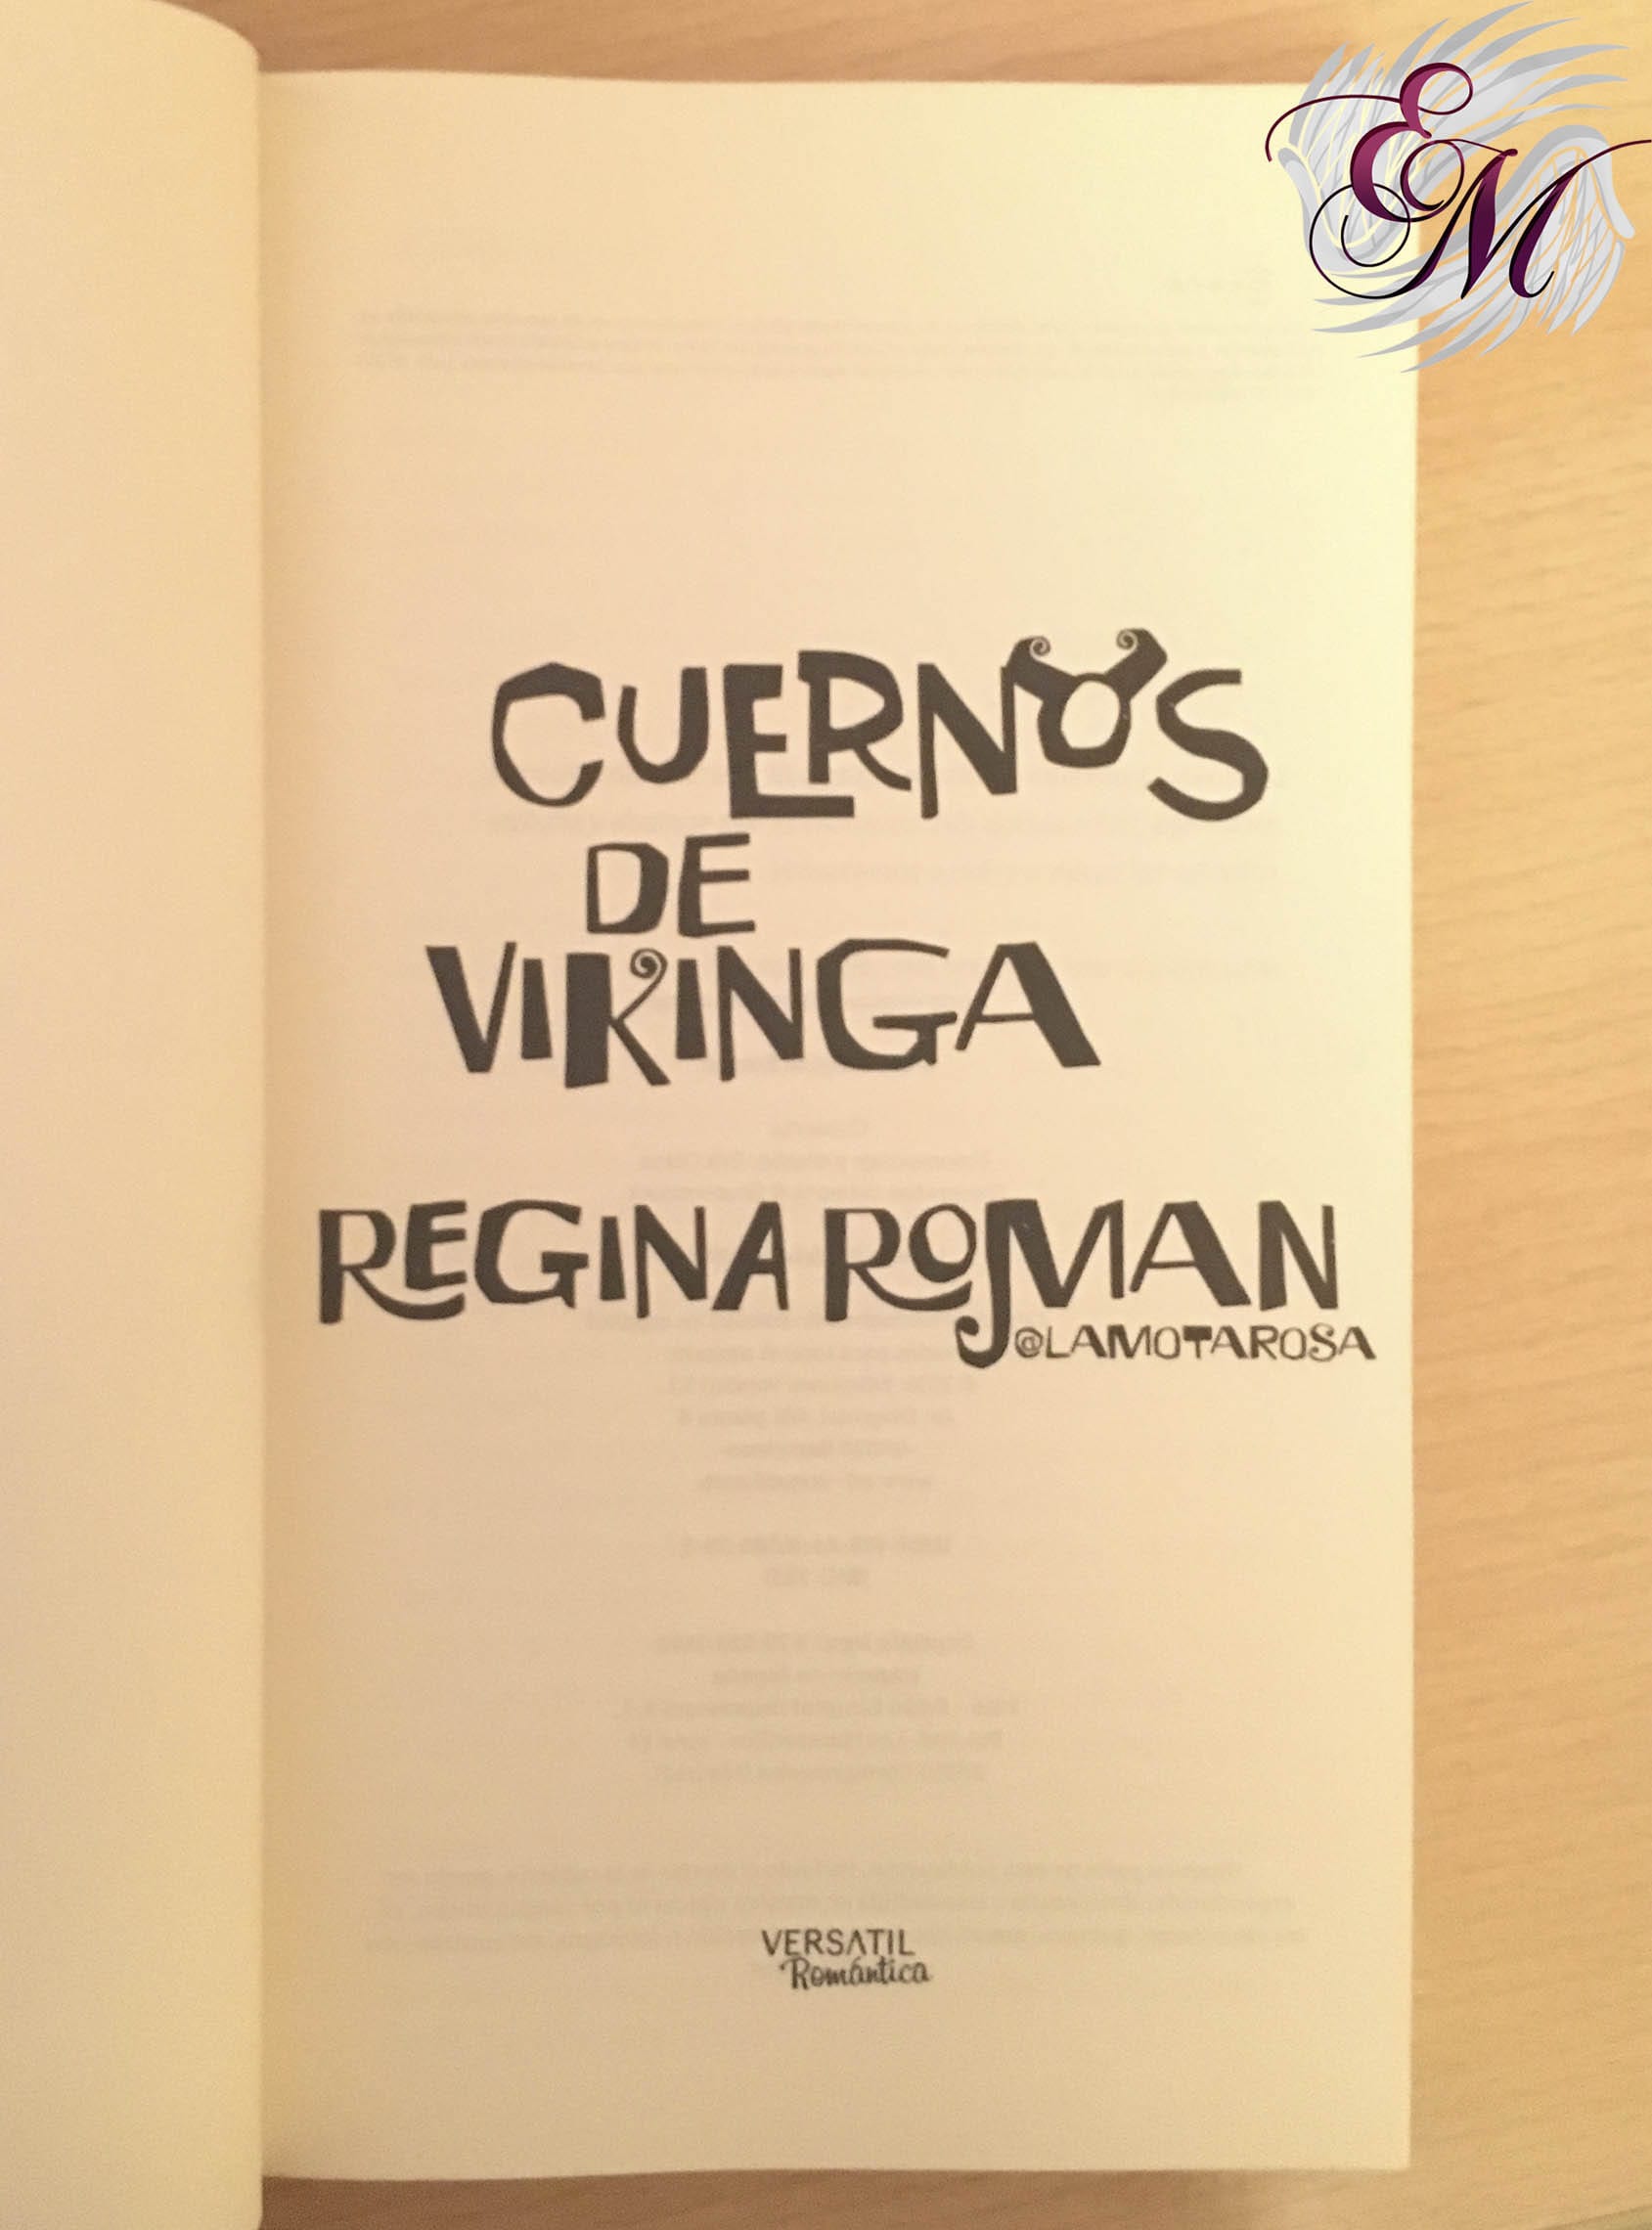 Cuernos de vikinga, de Regina Roman - Reseña